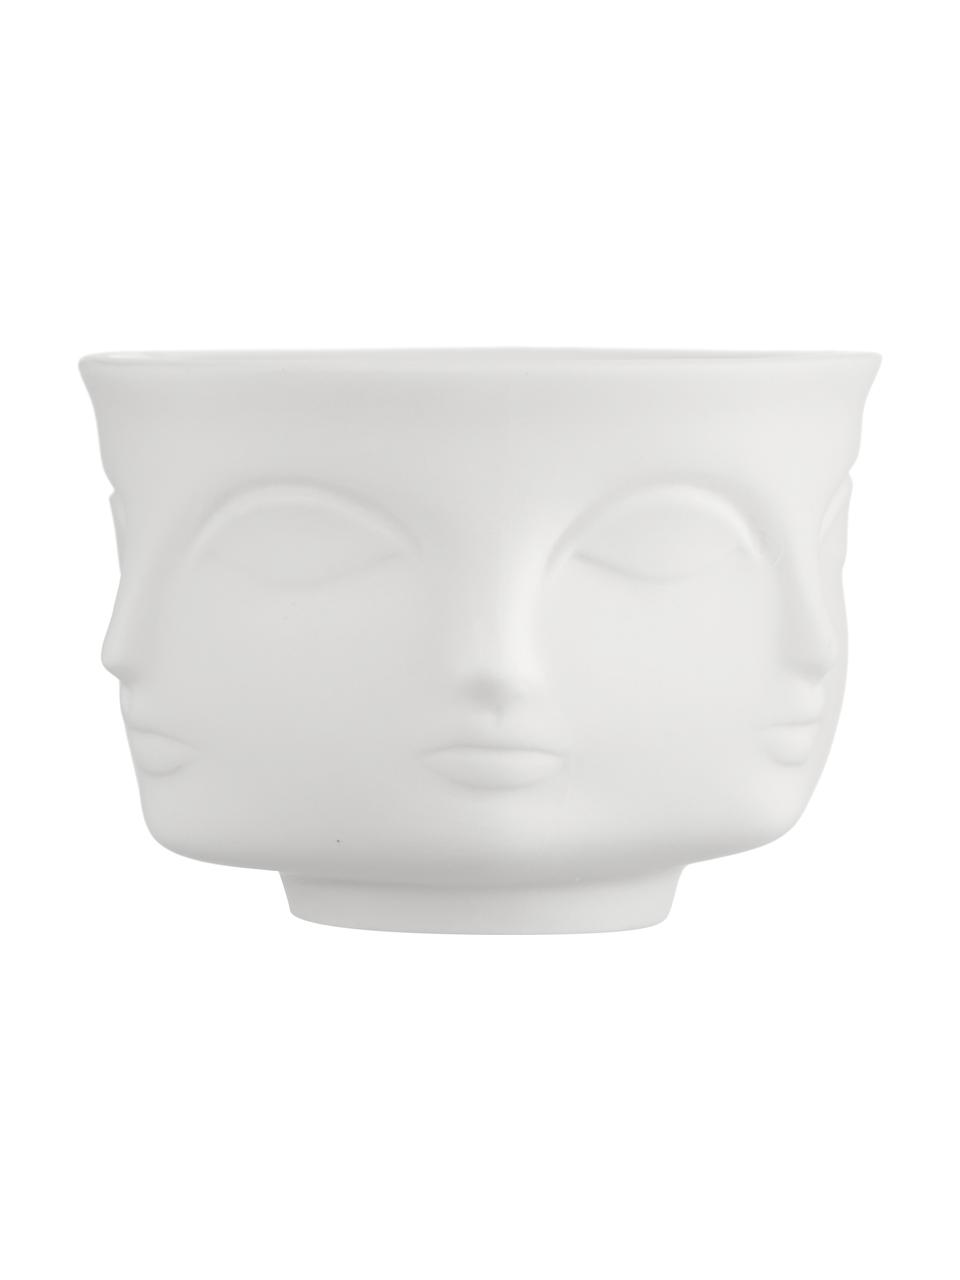 Malá designová miska na dipy Muse, Porcelán, Bílá, Ø 7 cm